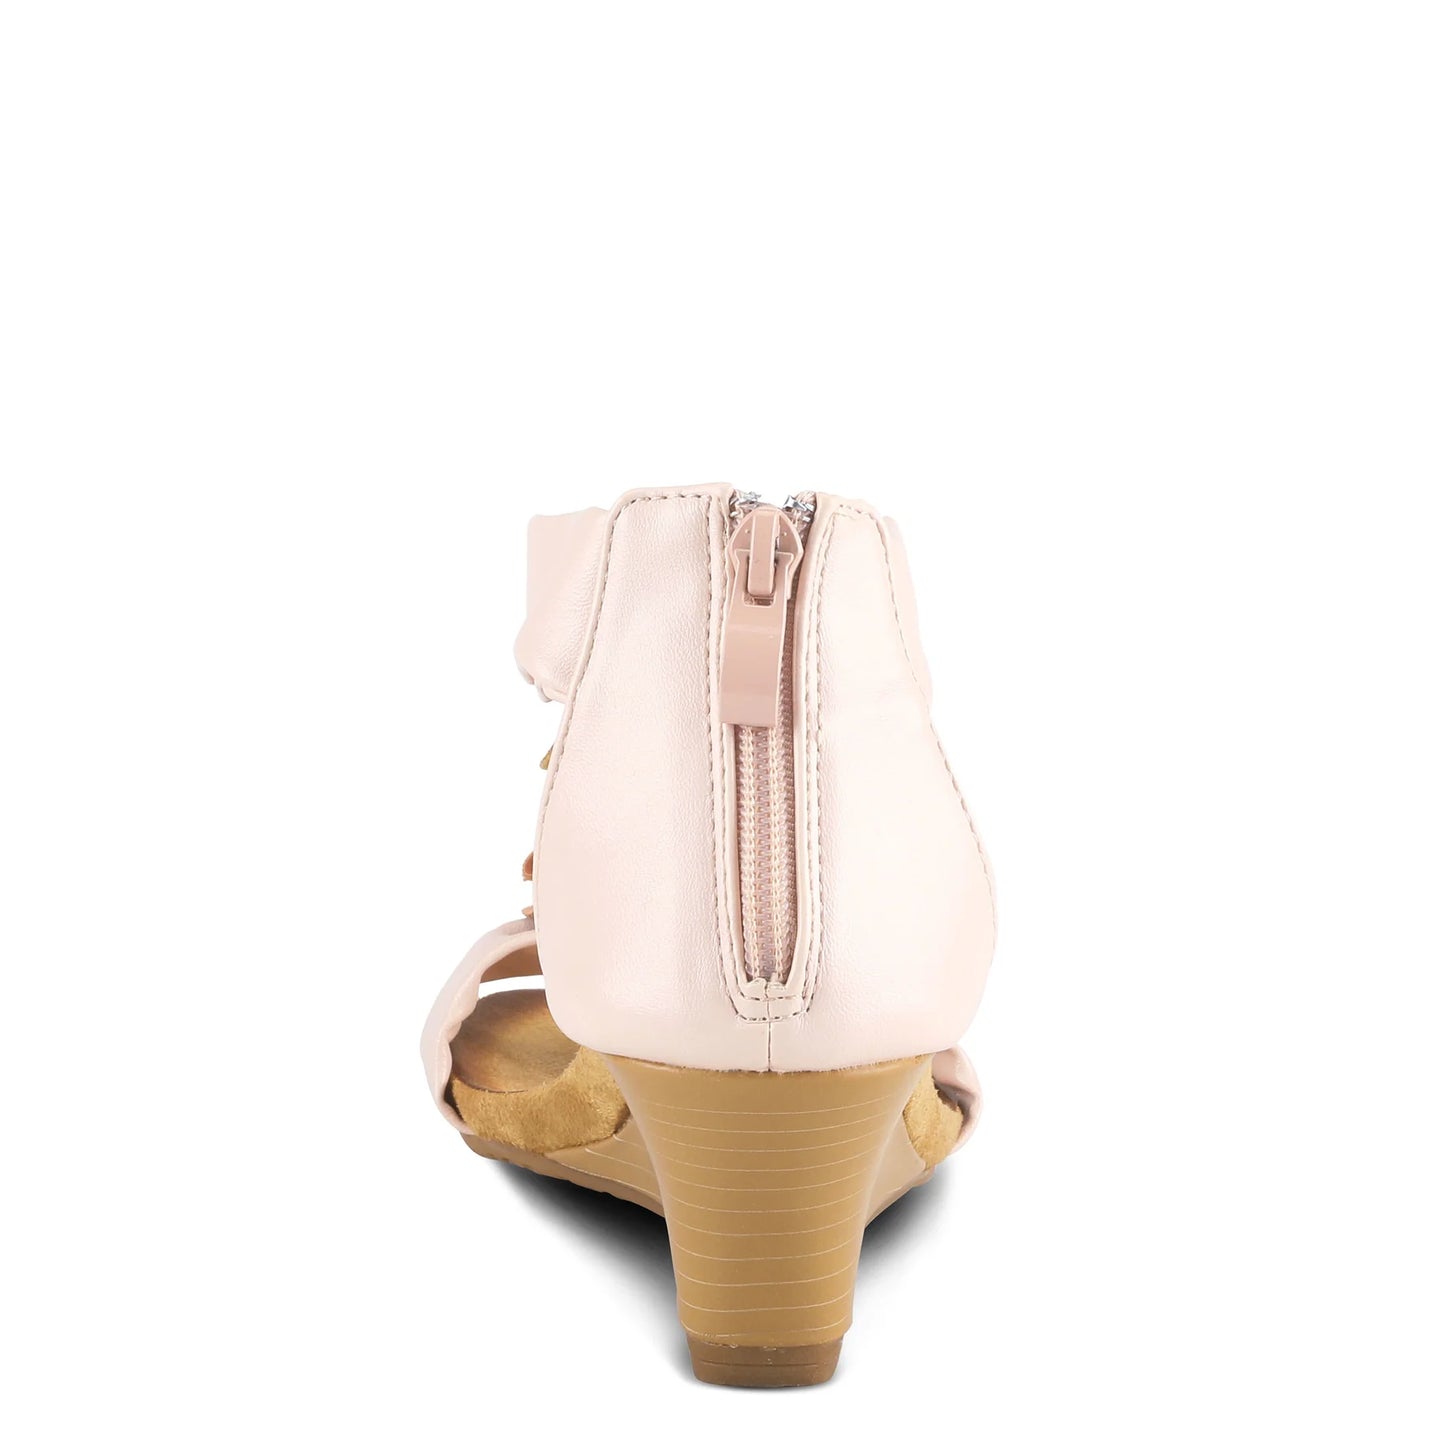 Patrizia by Spring Step Women's Harlequin Sandals - Peach Multi